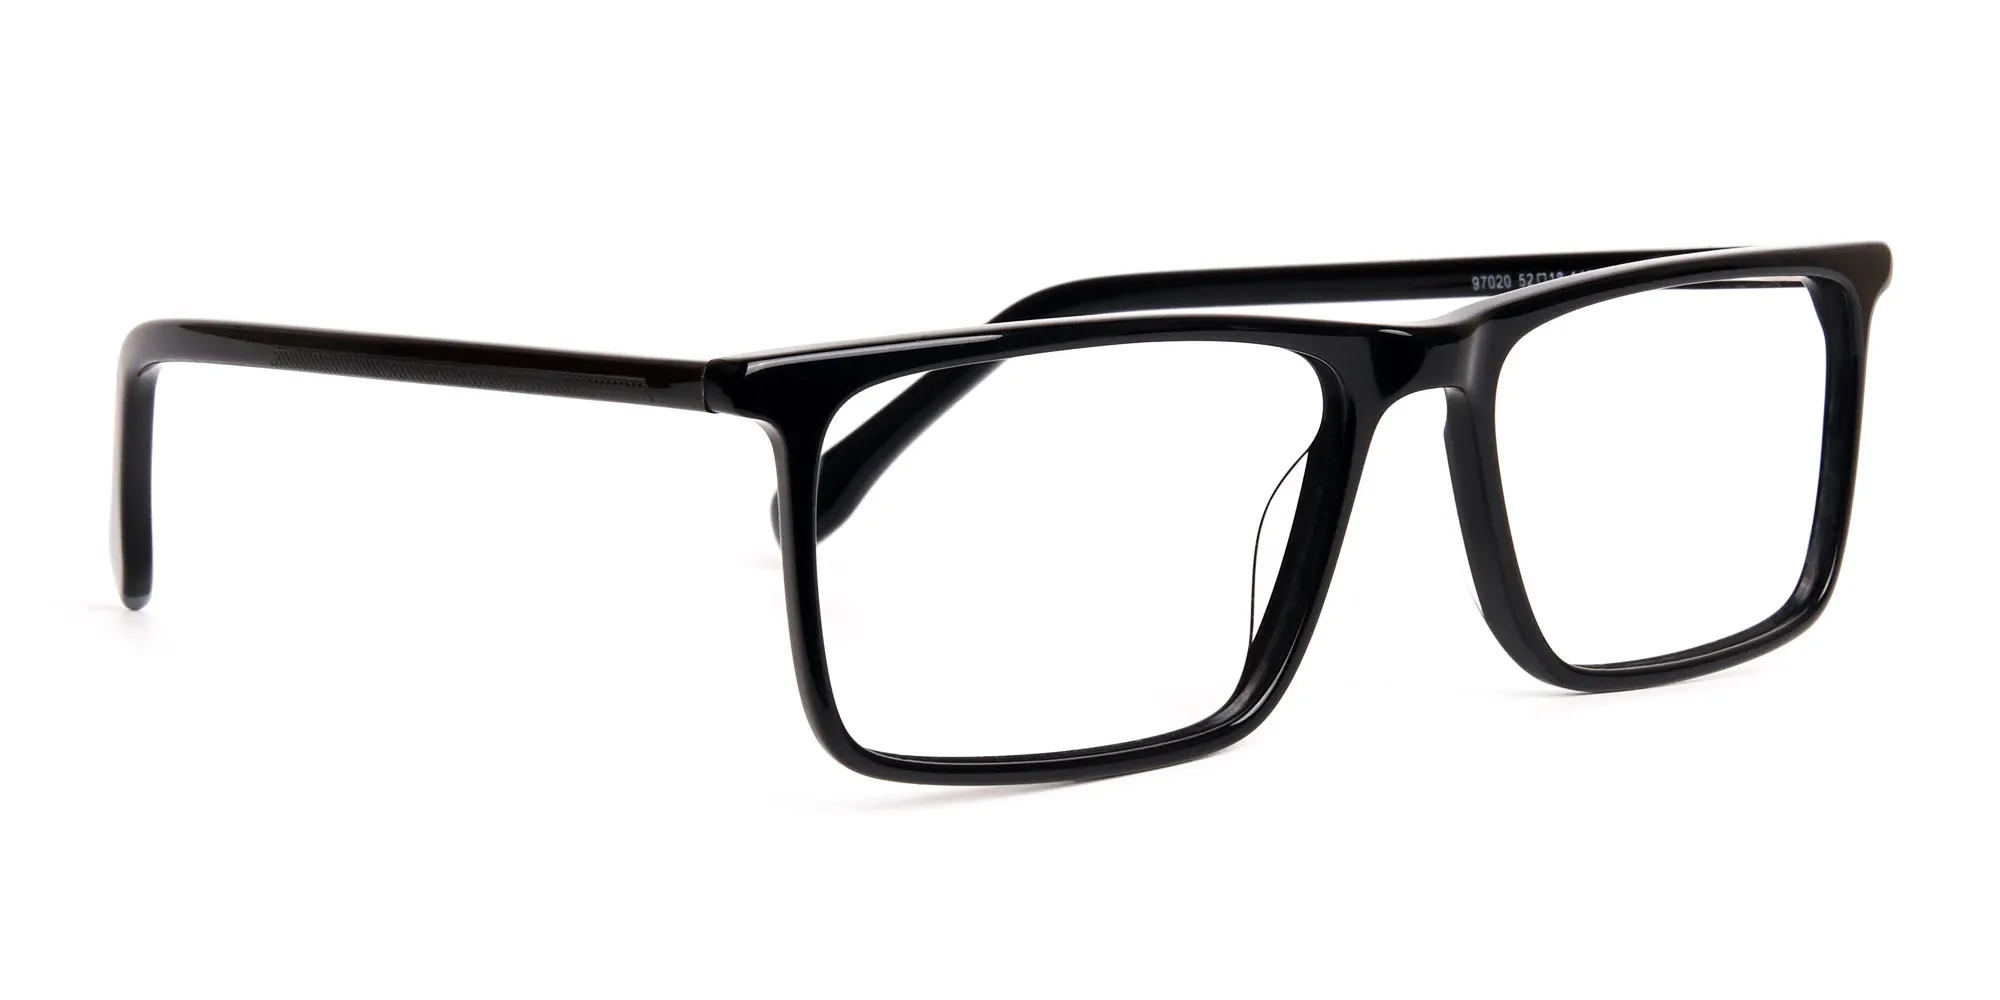 CHESTER 1 - Black and Grey Rectangular Glasses Frames - Specscart.®